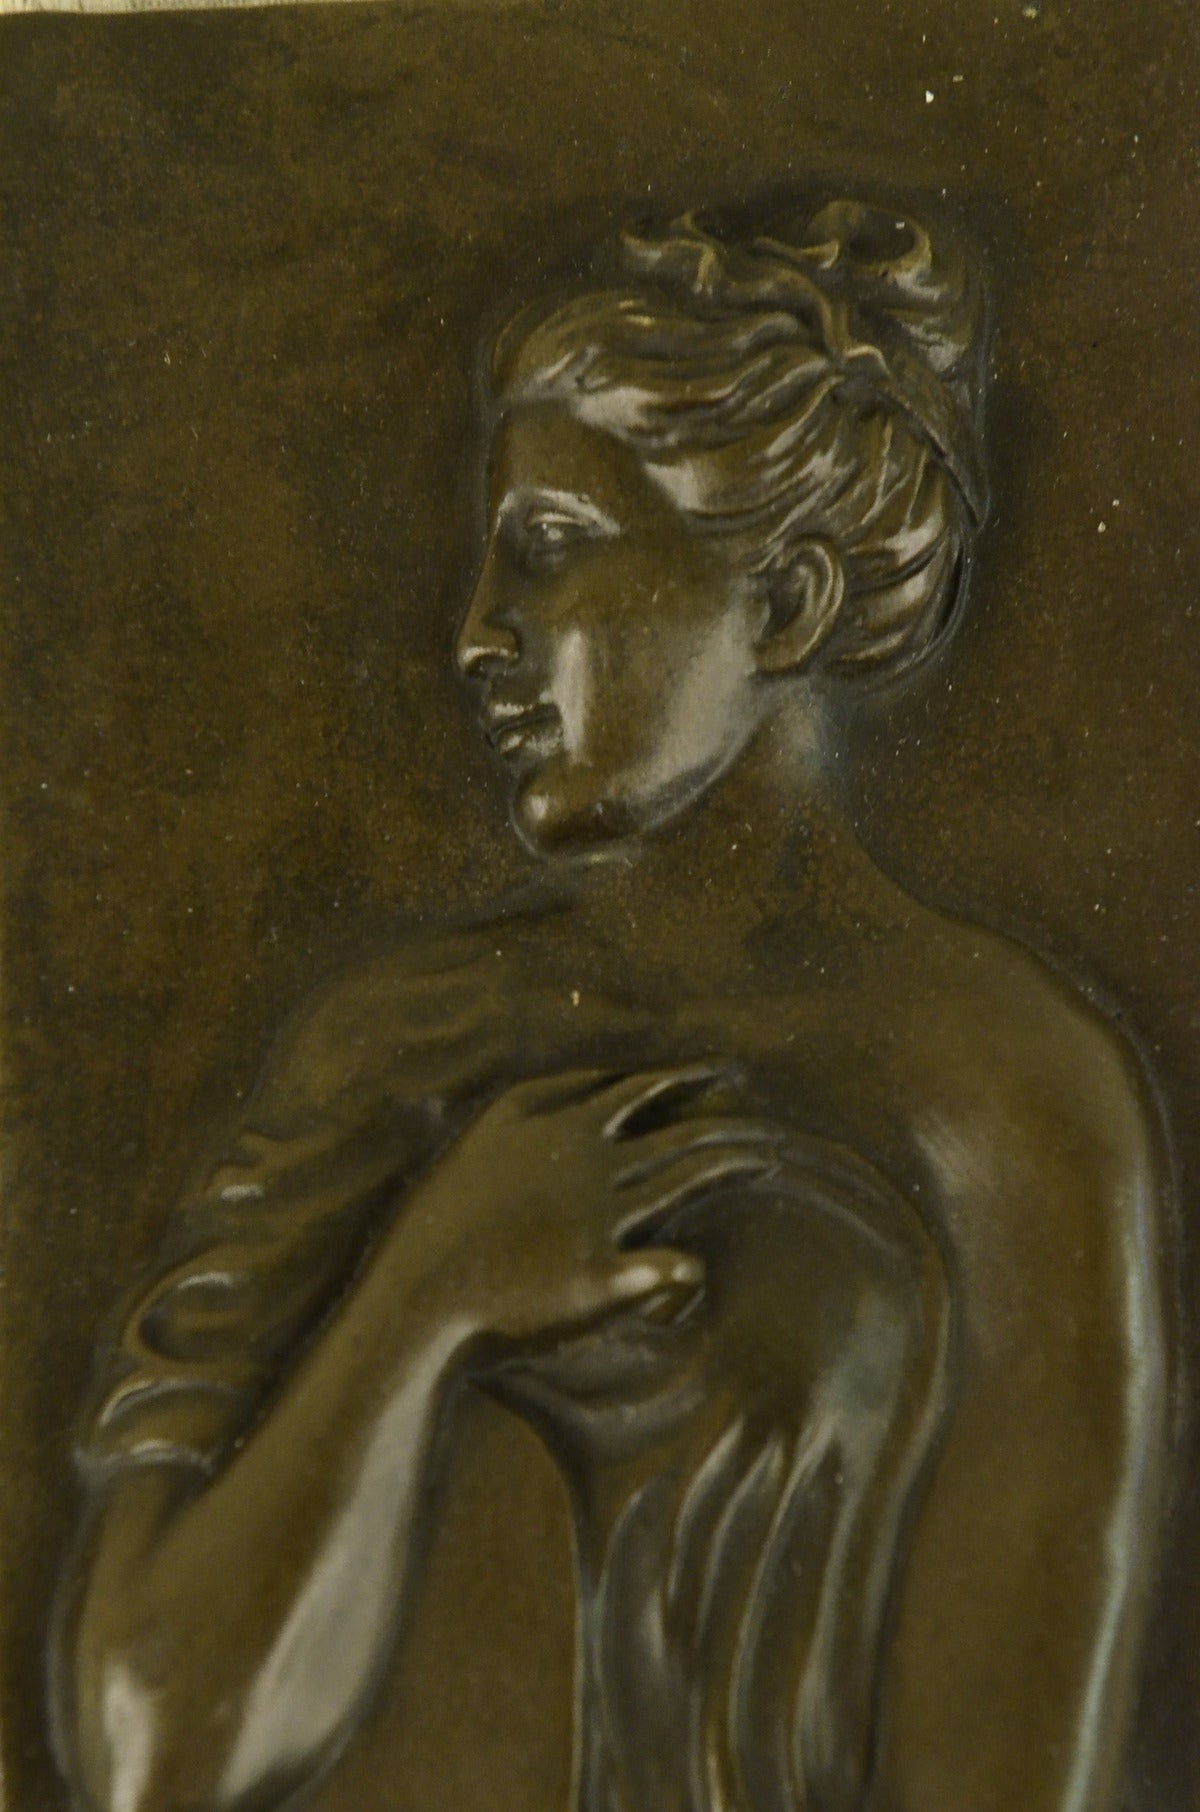 Handcrafted bronze sculpture SALE Jug With Lady Nouveau Art Metal Real Original